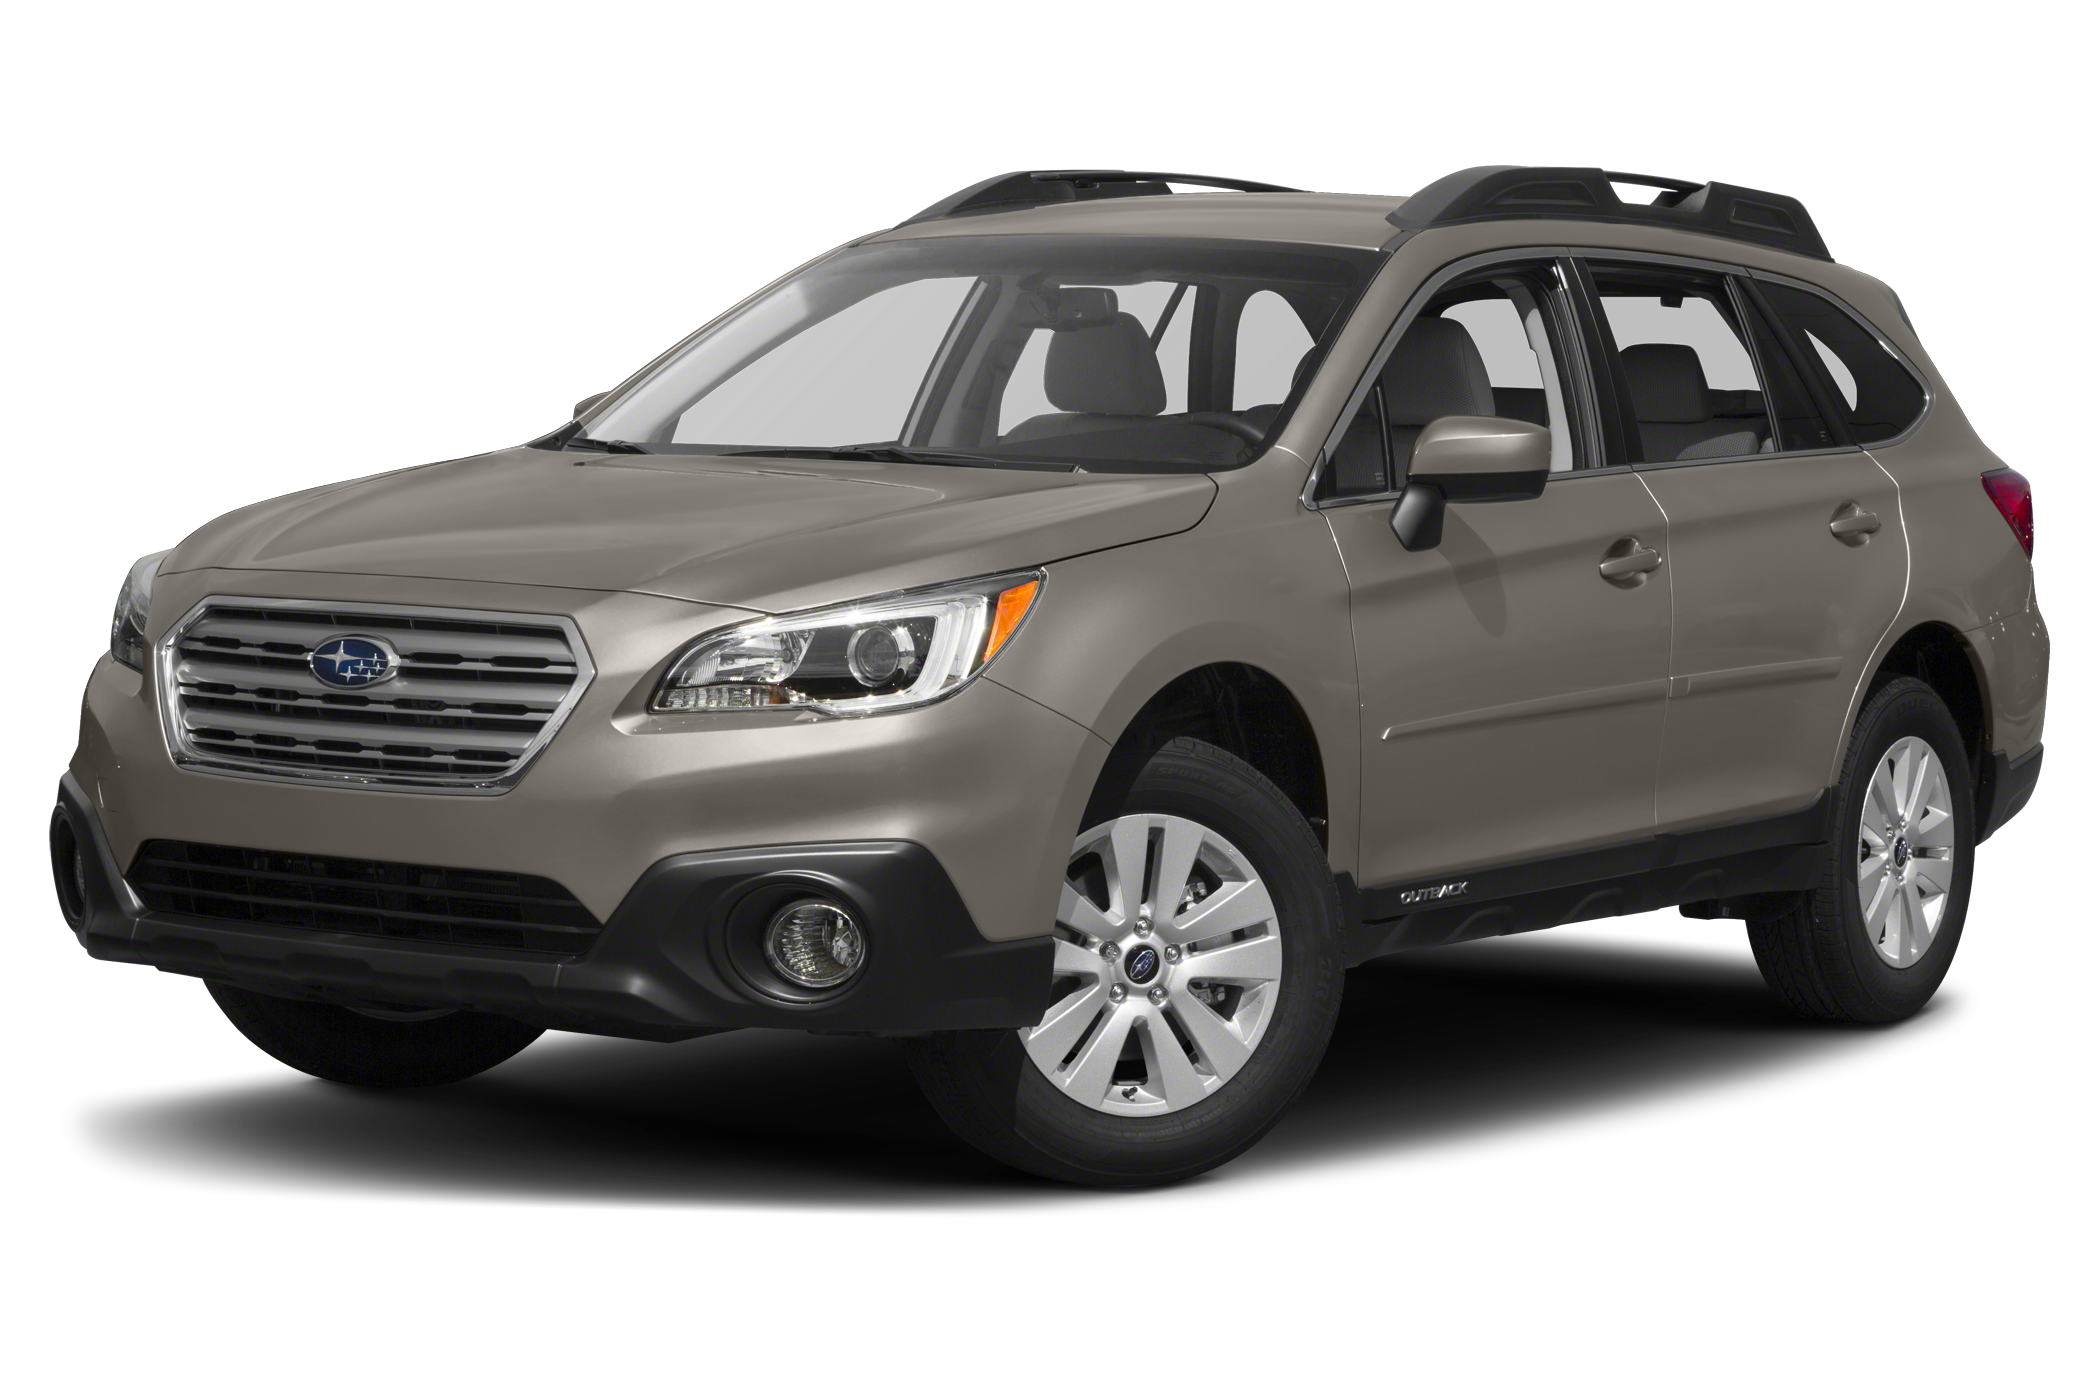 2016 Subaru Outback View Specs, Prices & Photos WHEELS.ca